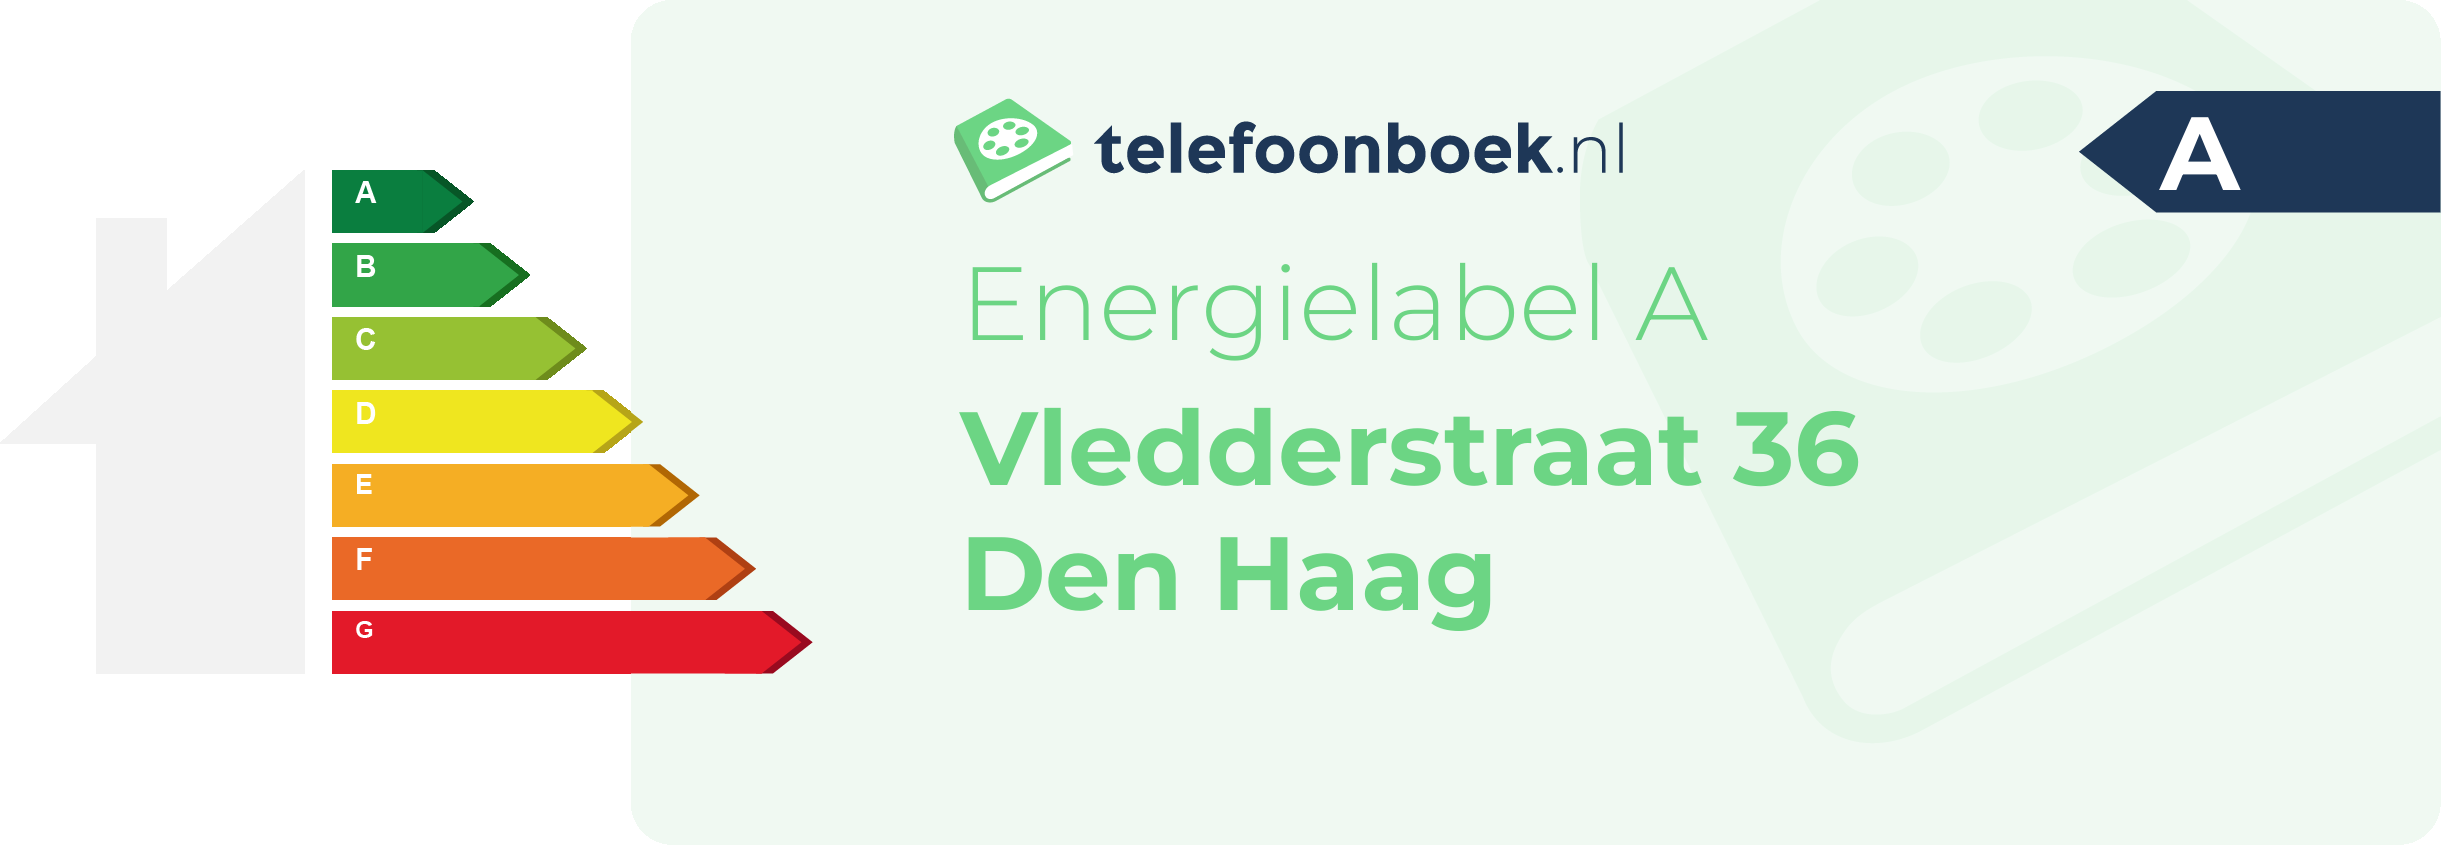 Energielabel Vledderstraat 36 Den Haag